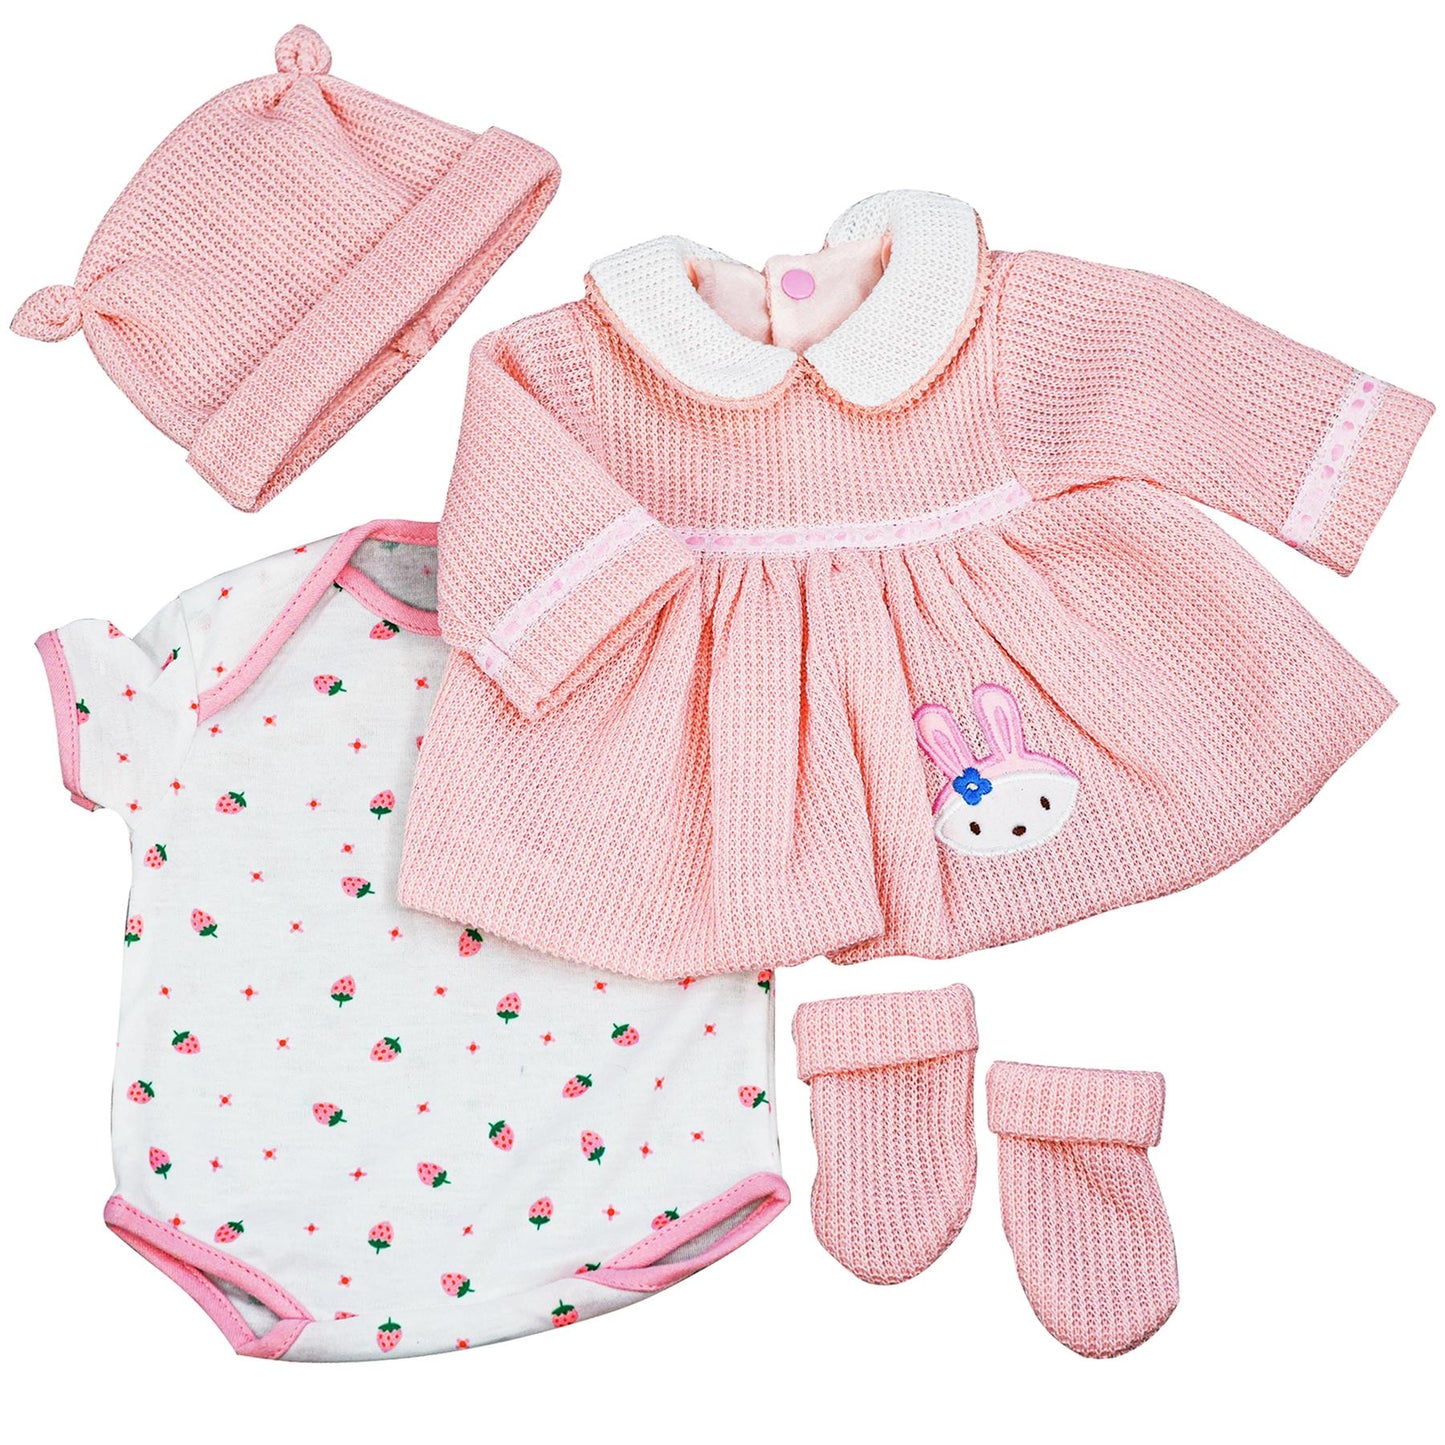 BiBi Outfits - Reborn Doll Clothes (Pink Dress) (50 cm / 20") by BiBi Doll - UKBuyZone